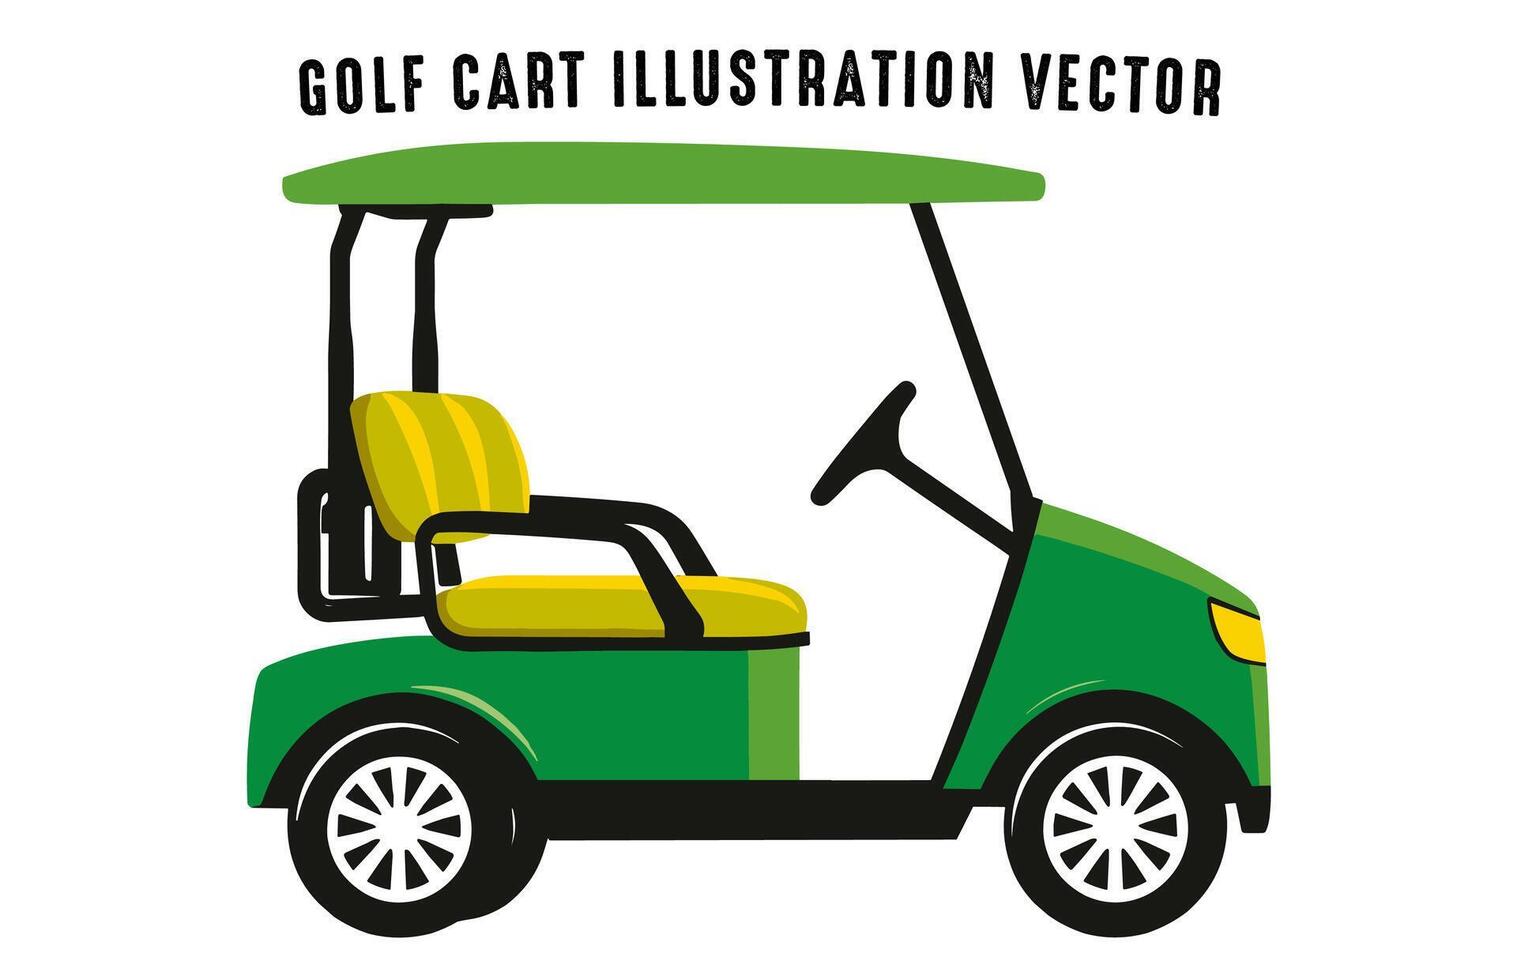 golf vagn illustration isolerat på en vit bakgrund, en klubb bil fordon vektor